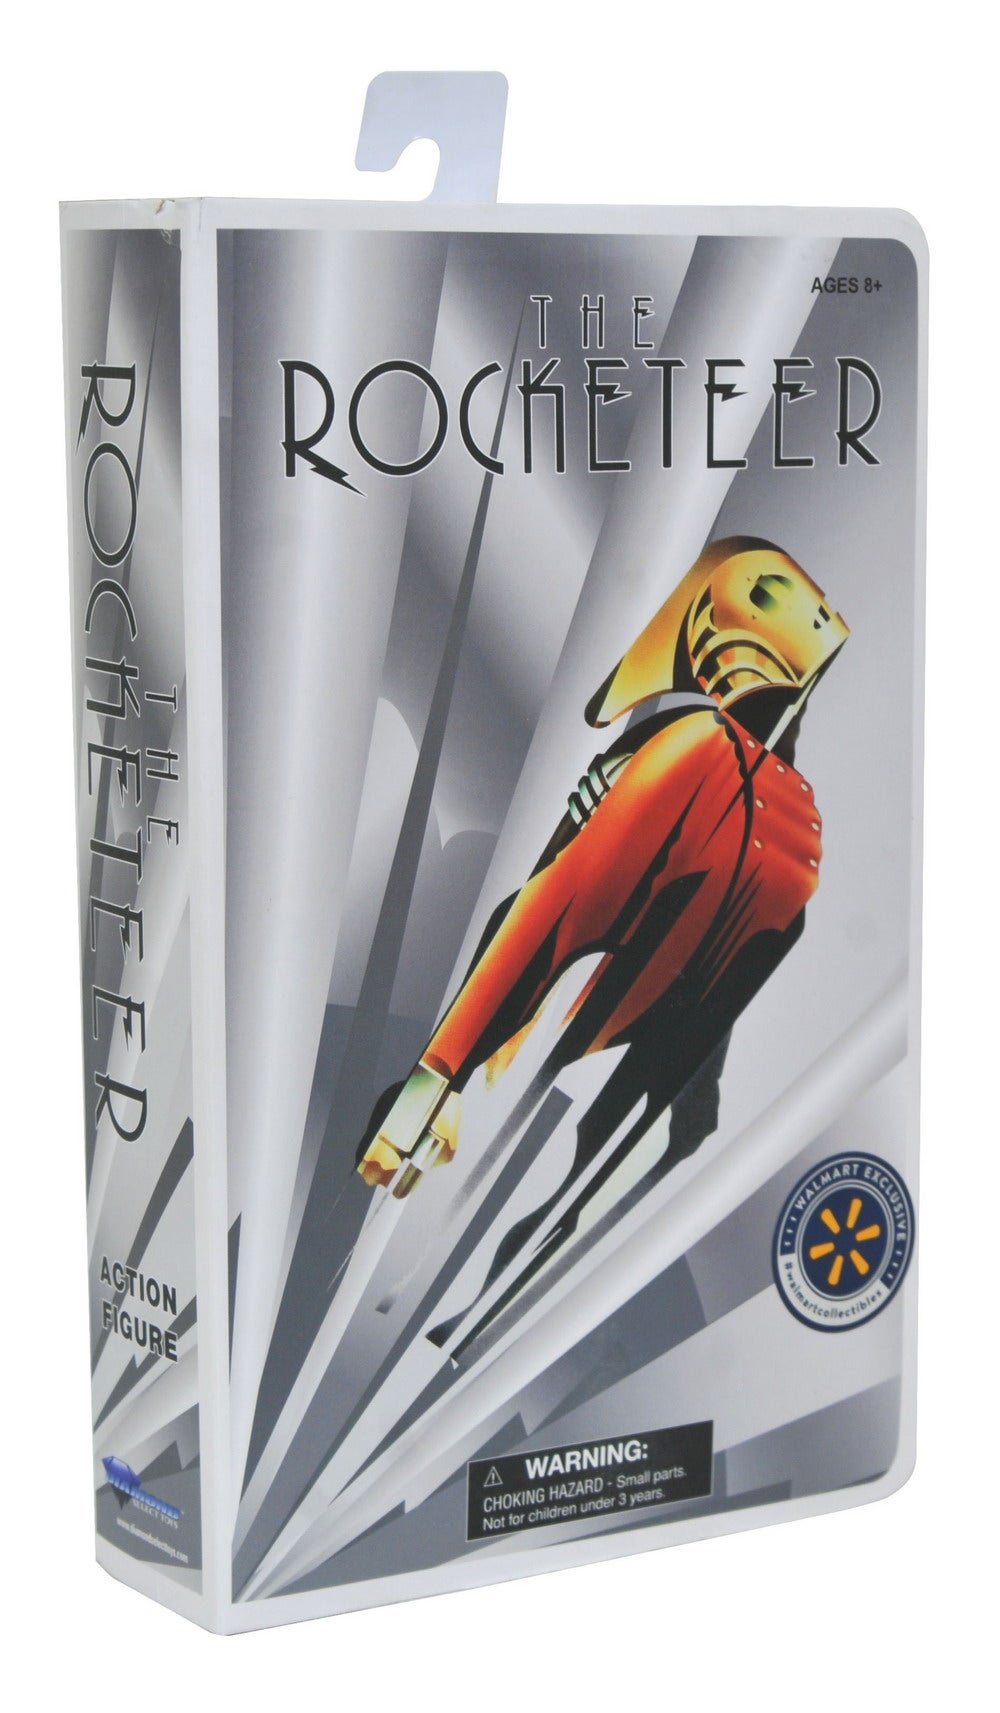 RocketeerVHS1